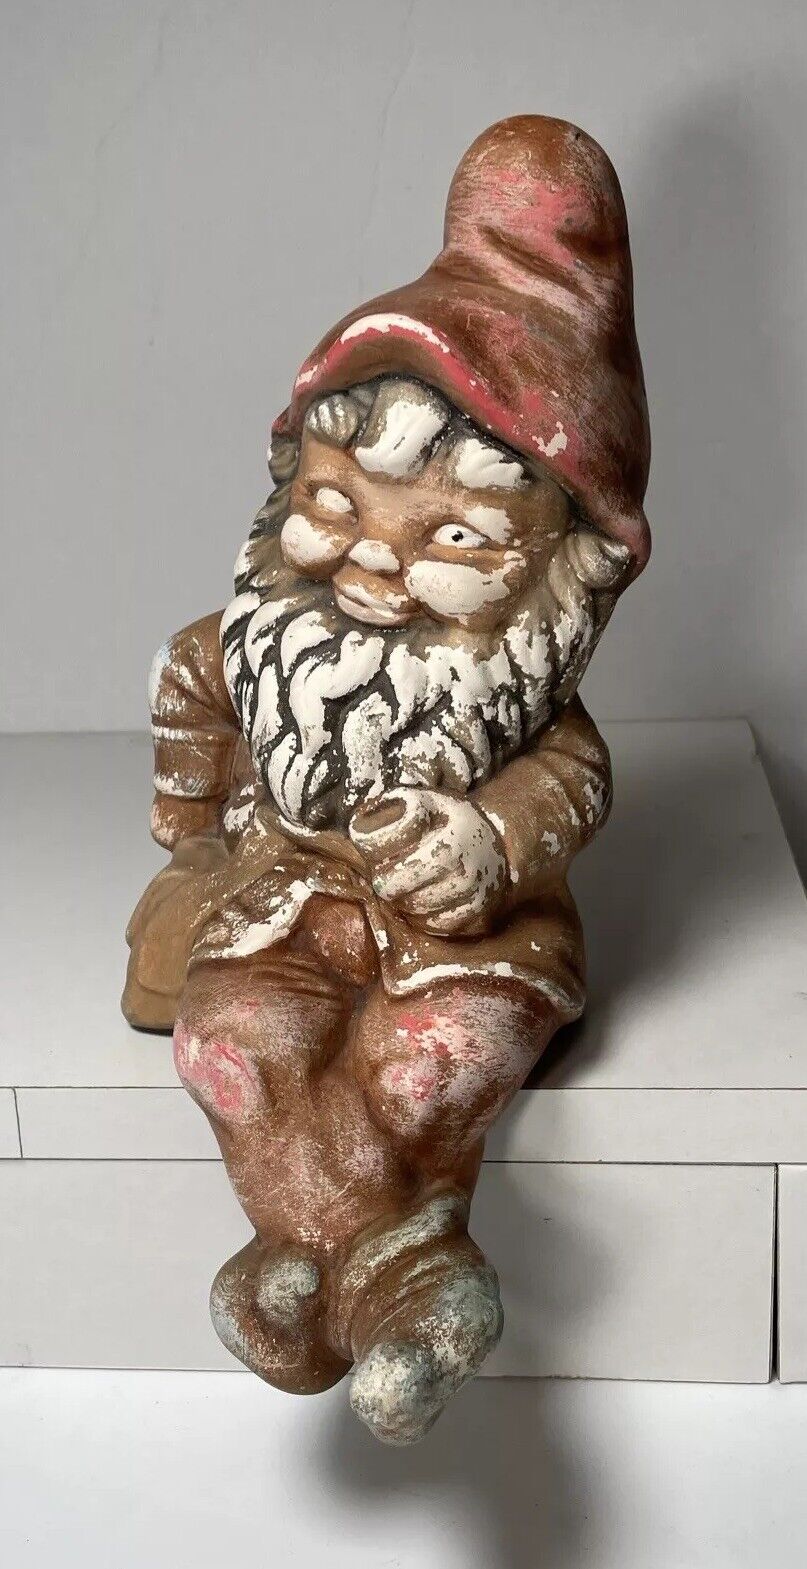 Knome Gnome Vintage 1960’s Rare German Made Ceramic Sitting Gnome Garden Figure